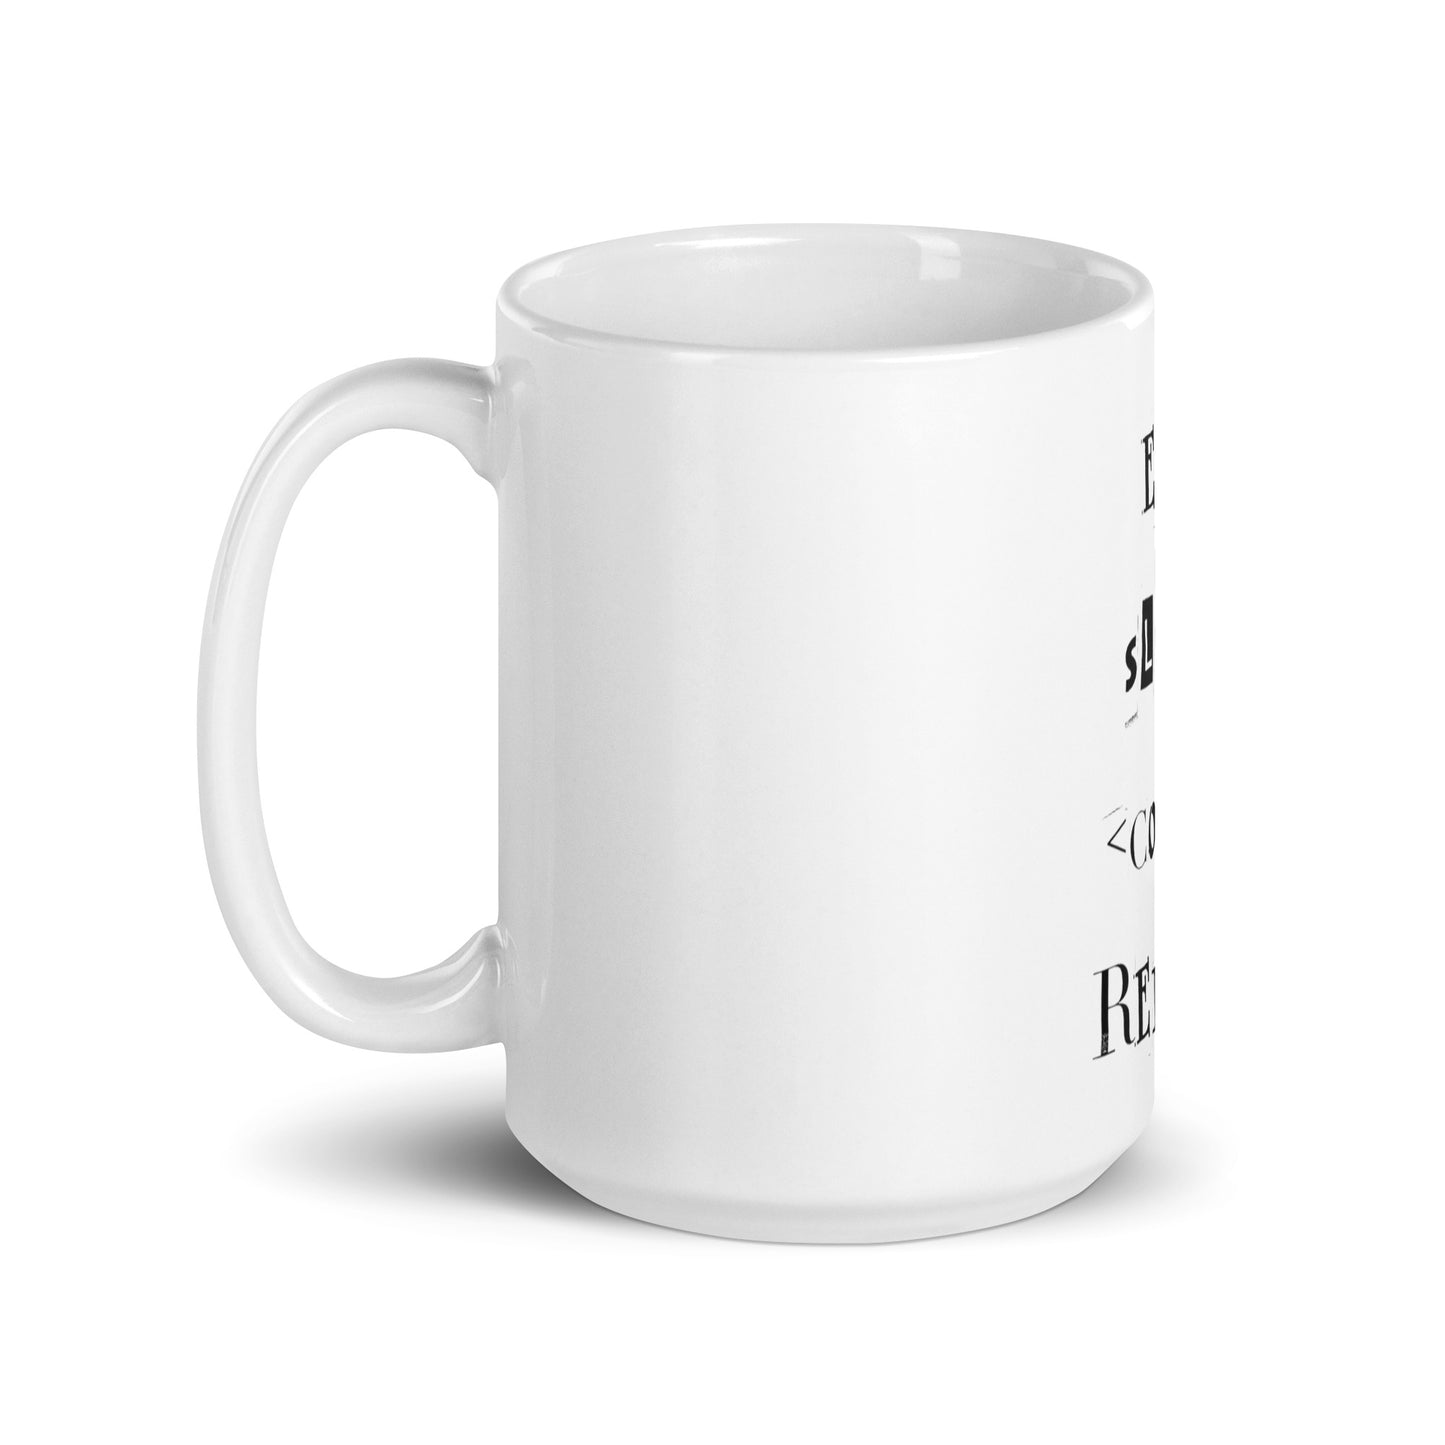 ESCR glossy mug